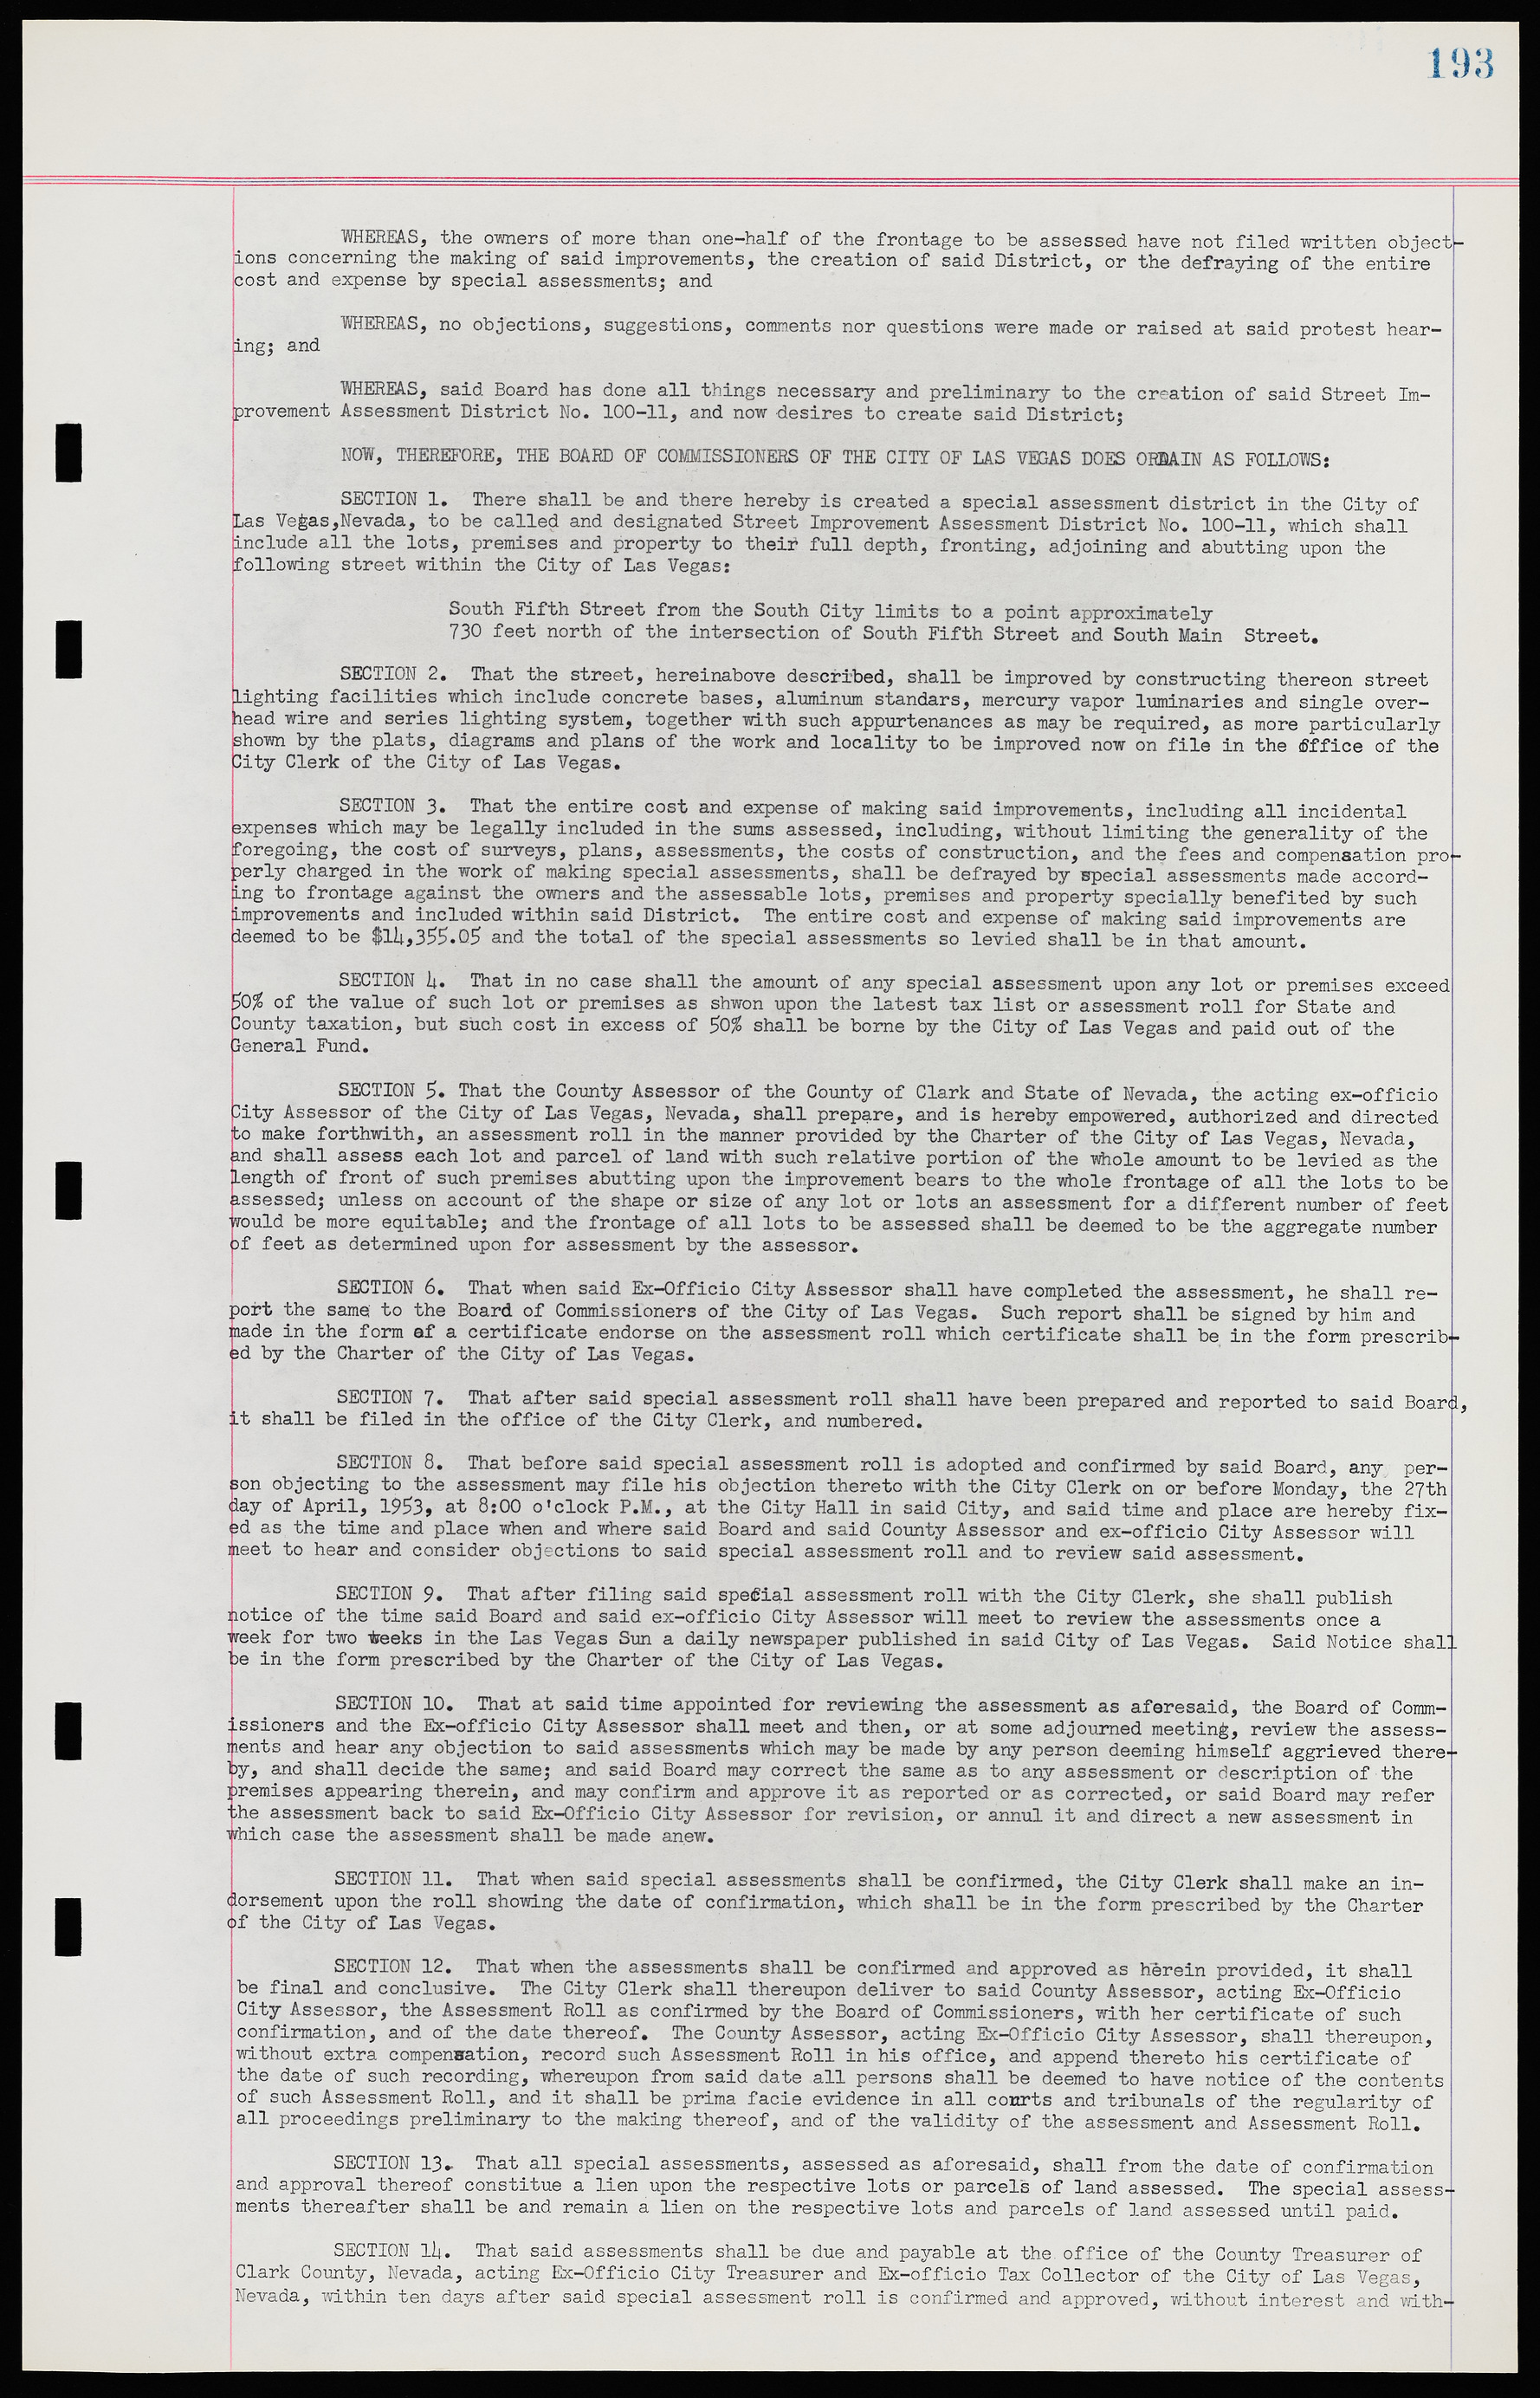 Las Vegas City Ordinances, November 13, 1950 to August 6, 1958, lvc000015-201